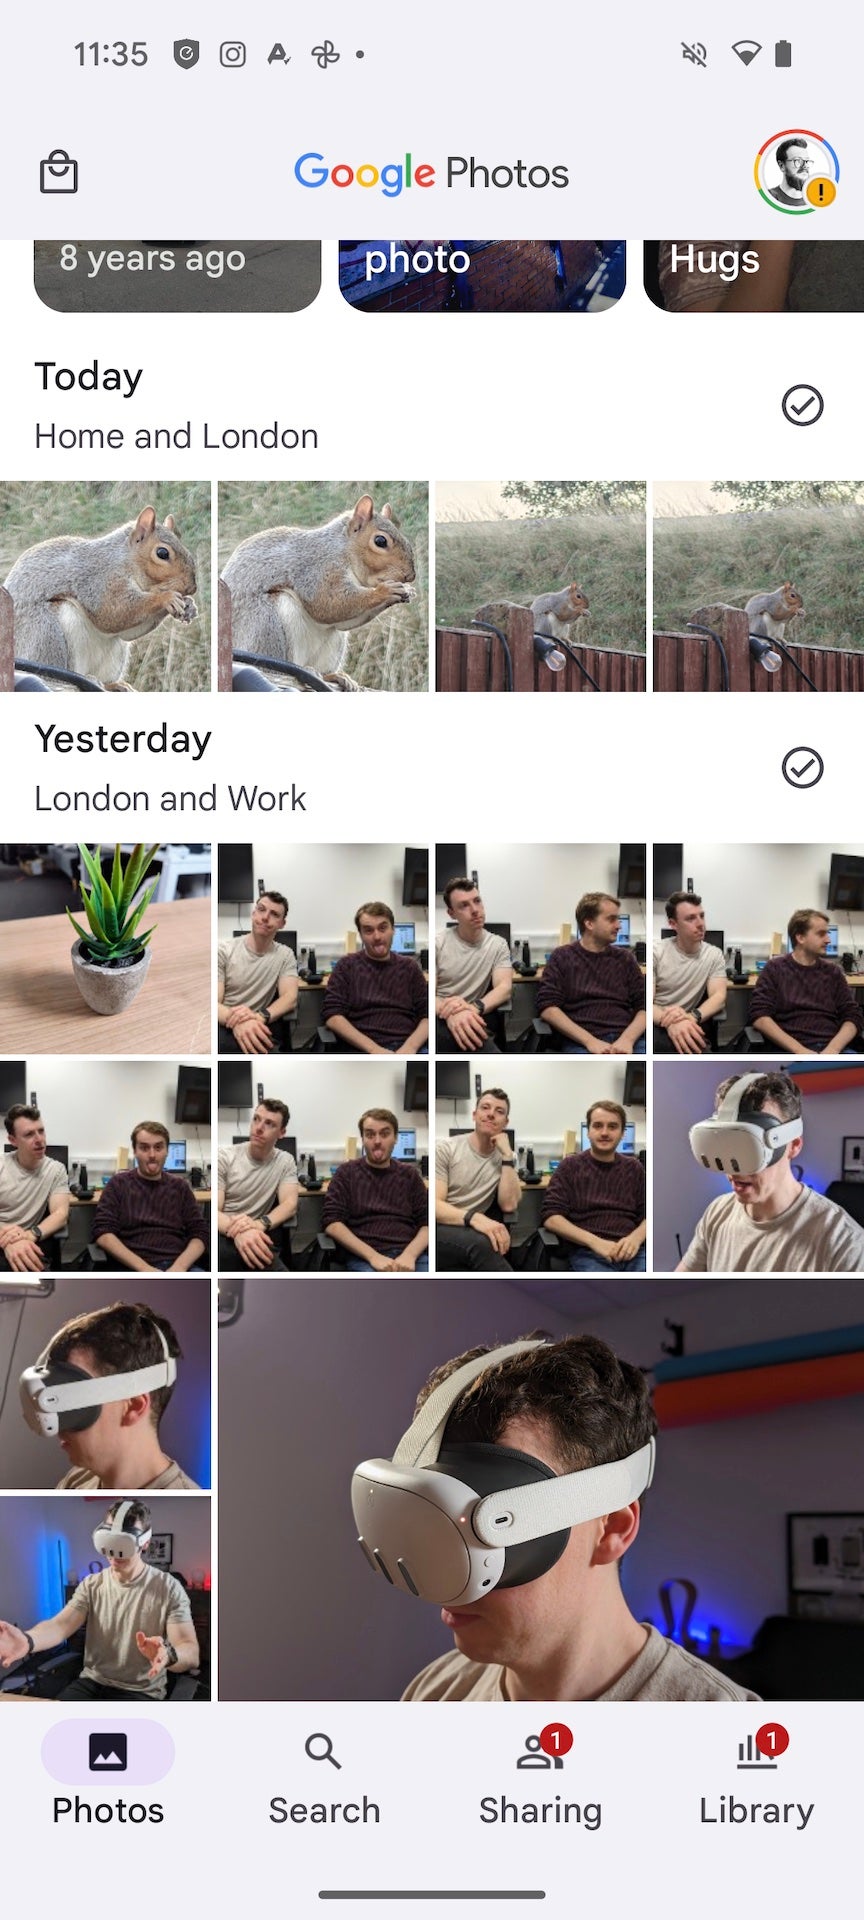 Google Photos interface